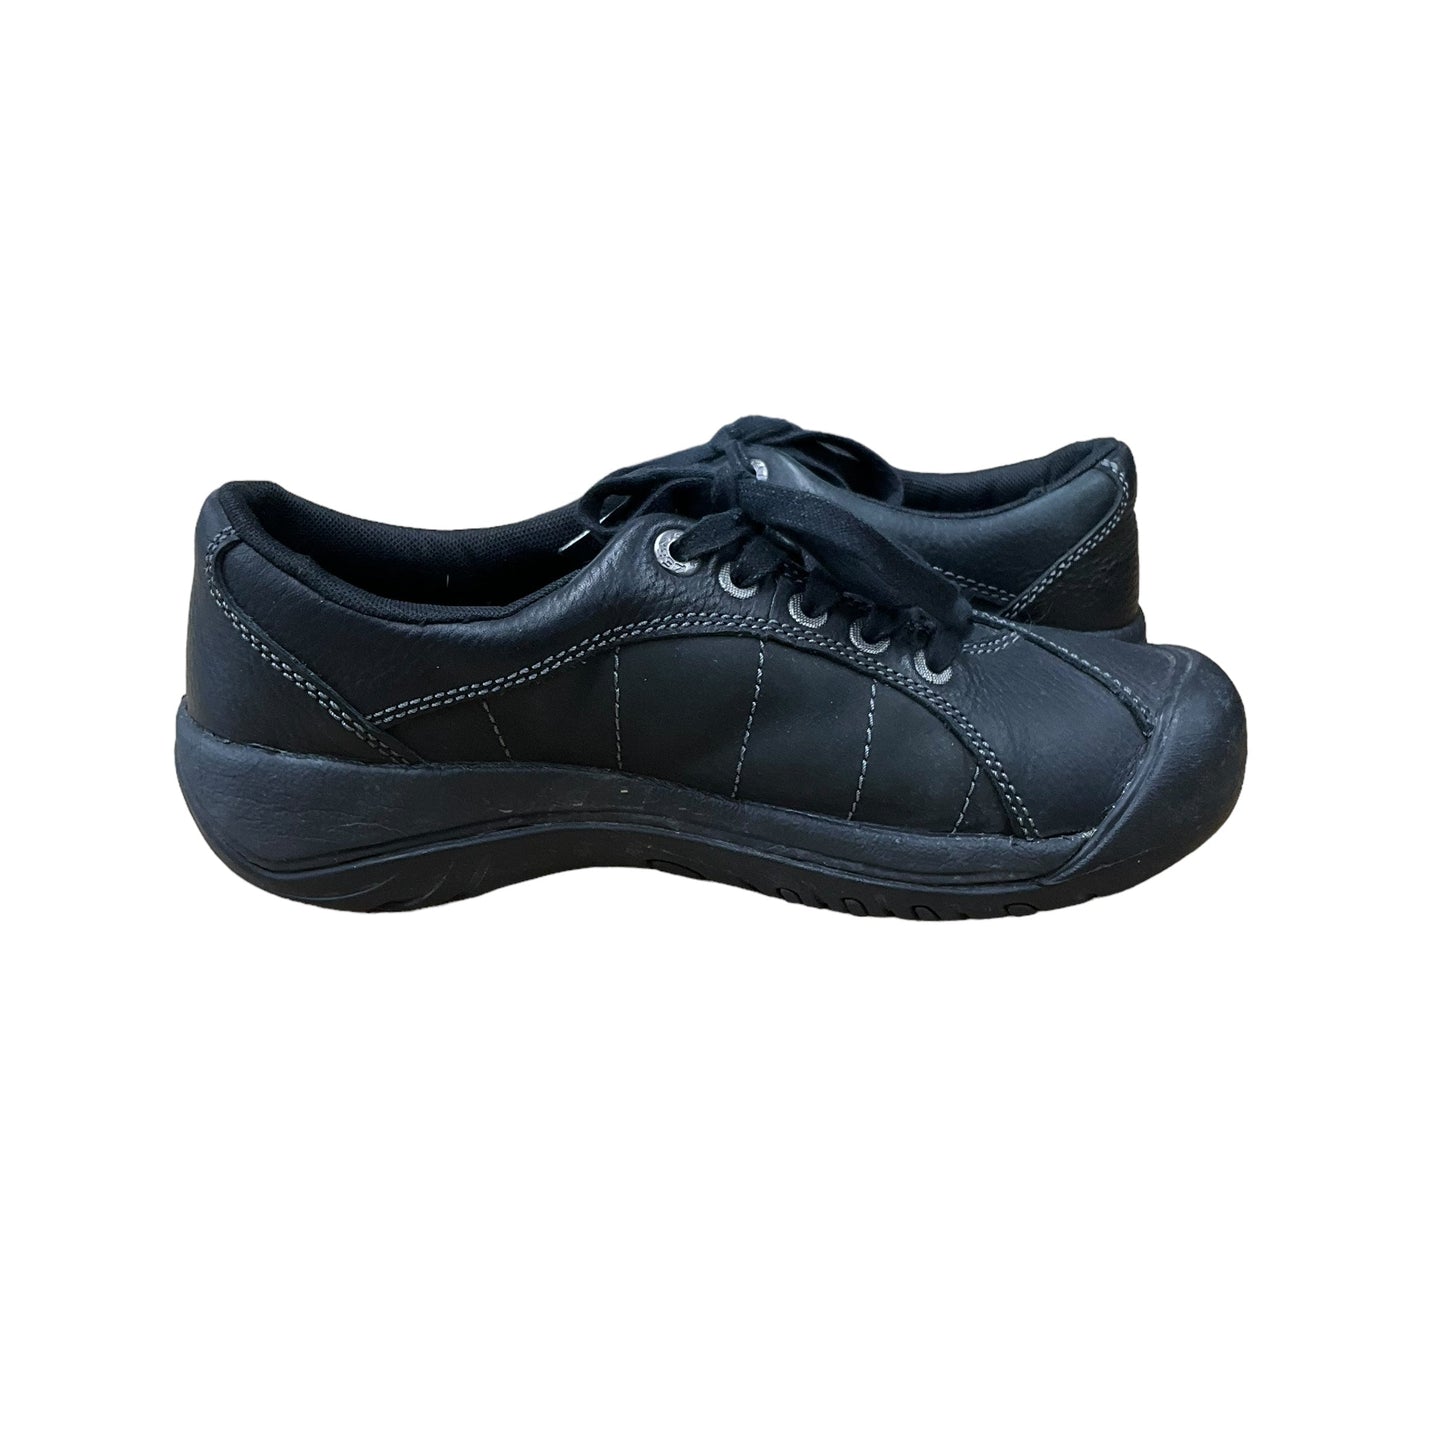 Black Shoes Flats Keen, Size 7